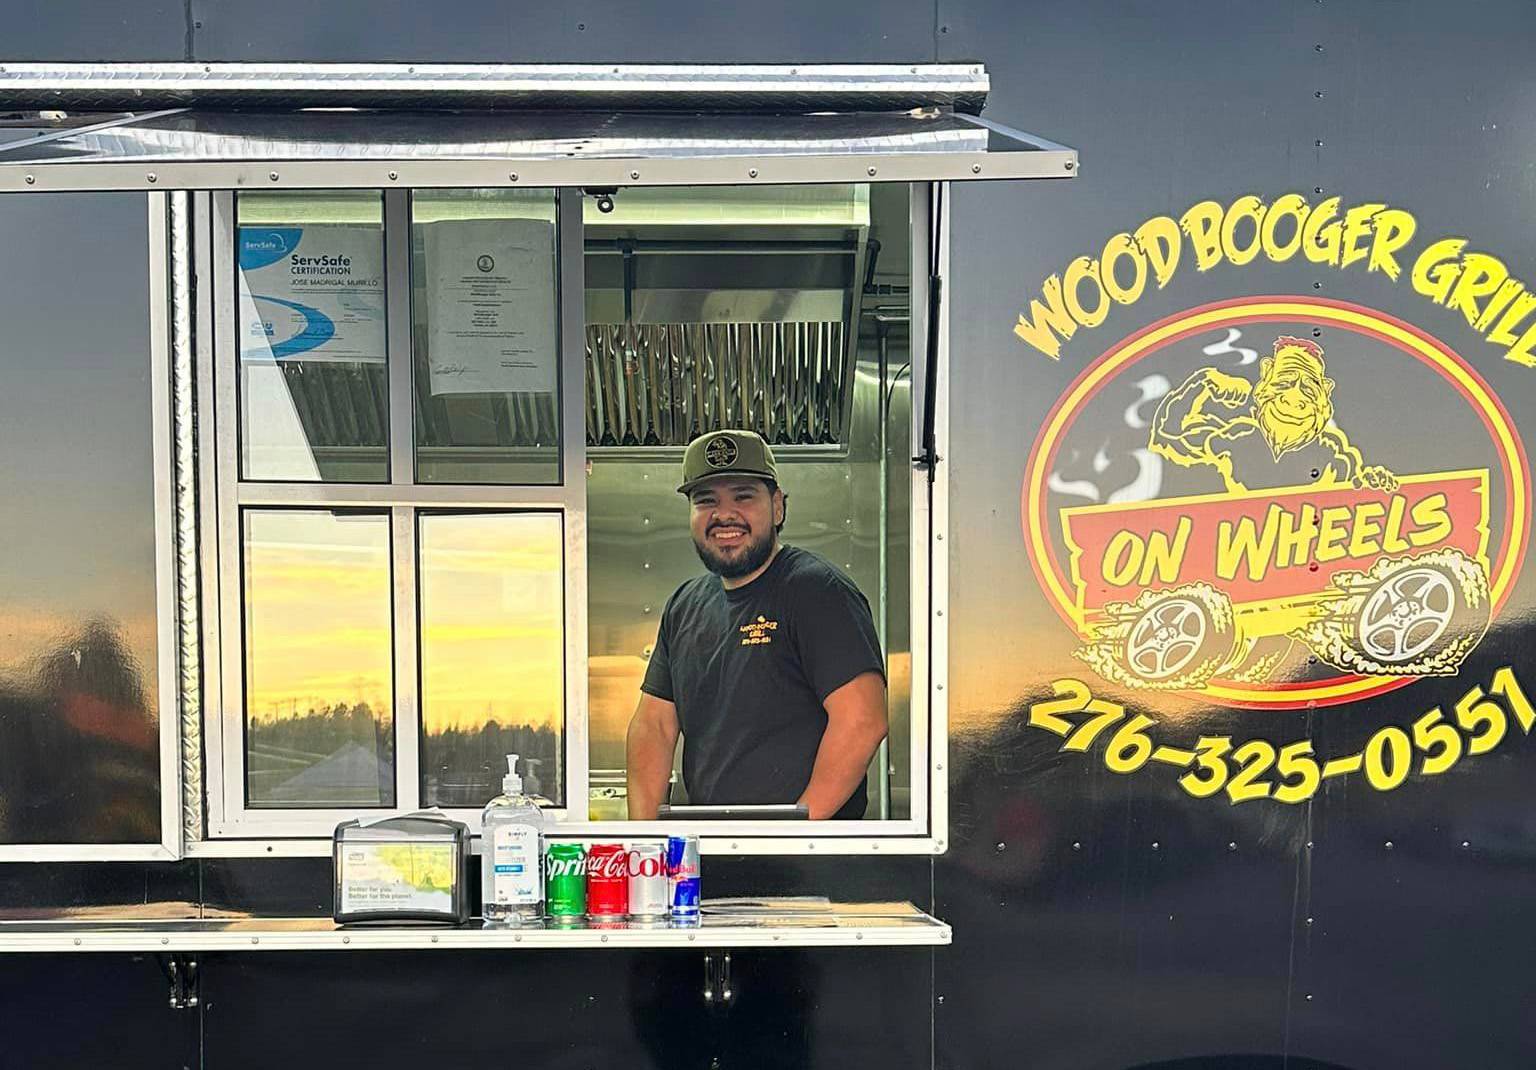 Woodbooger mobile food truck serving the Norton Virginia area